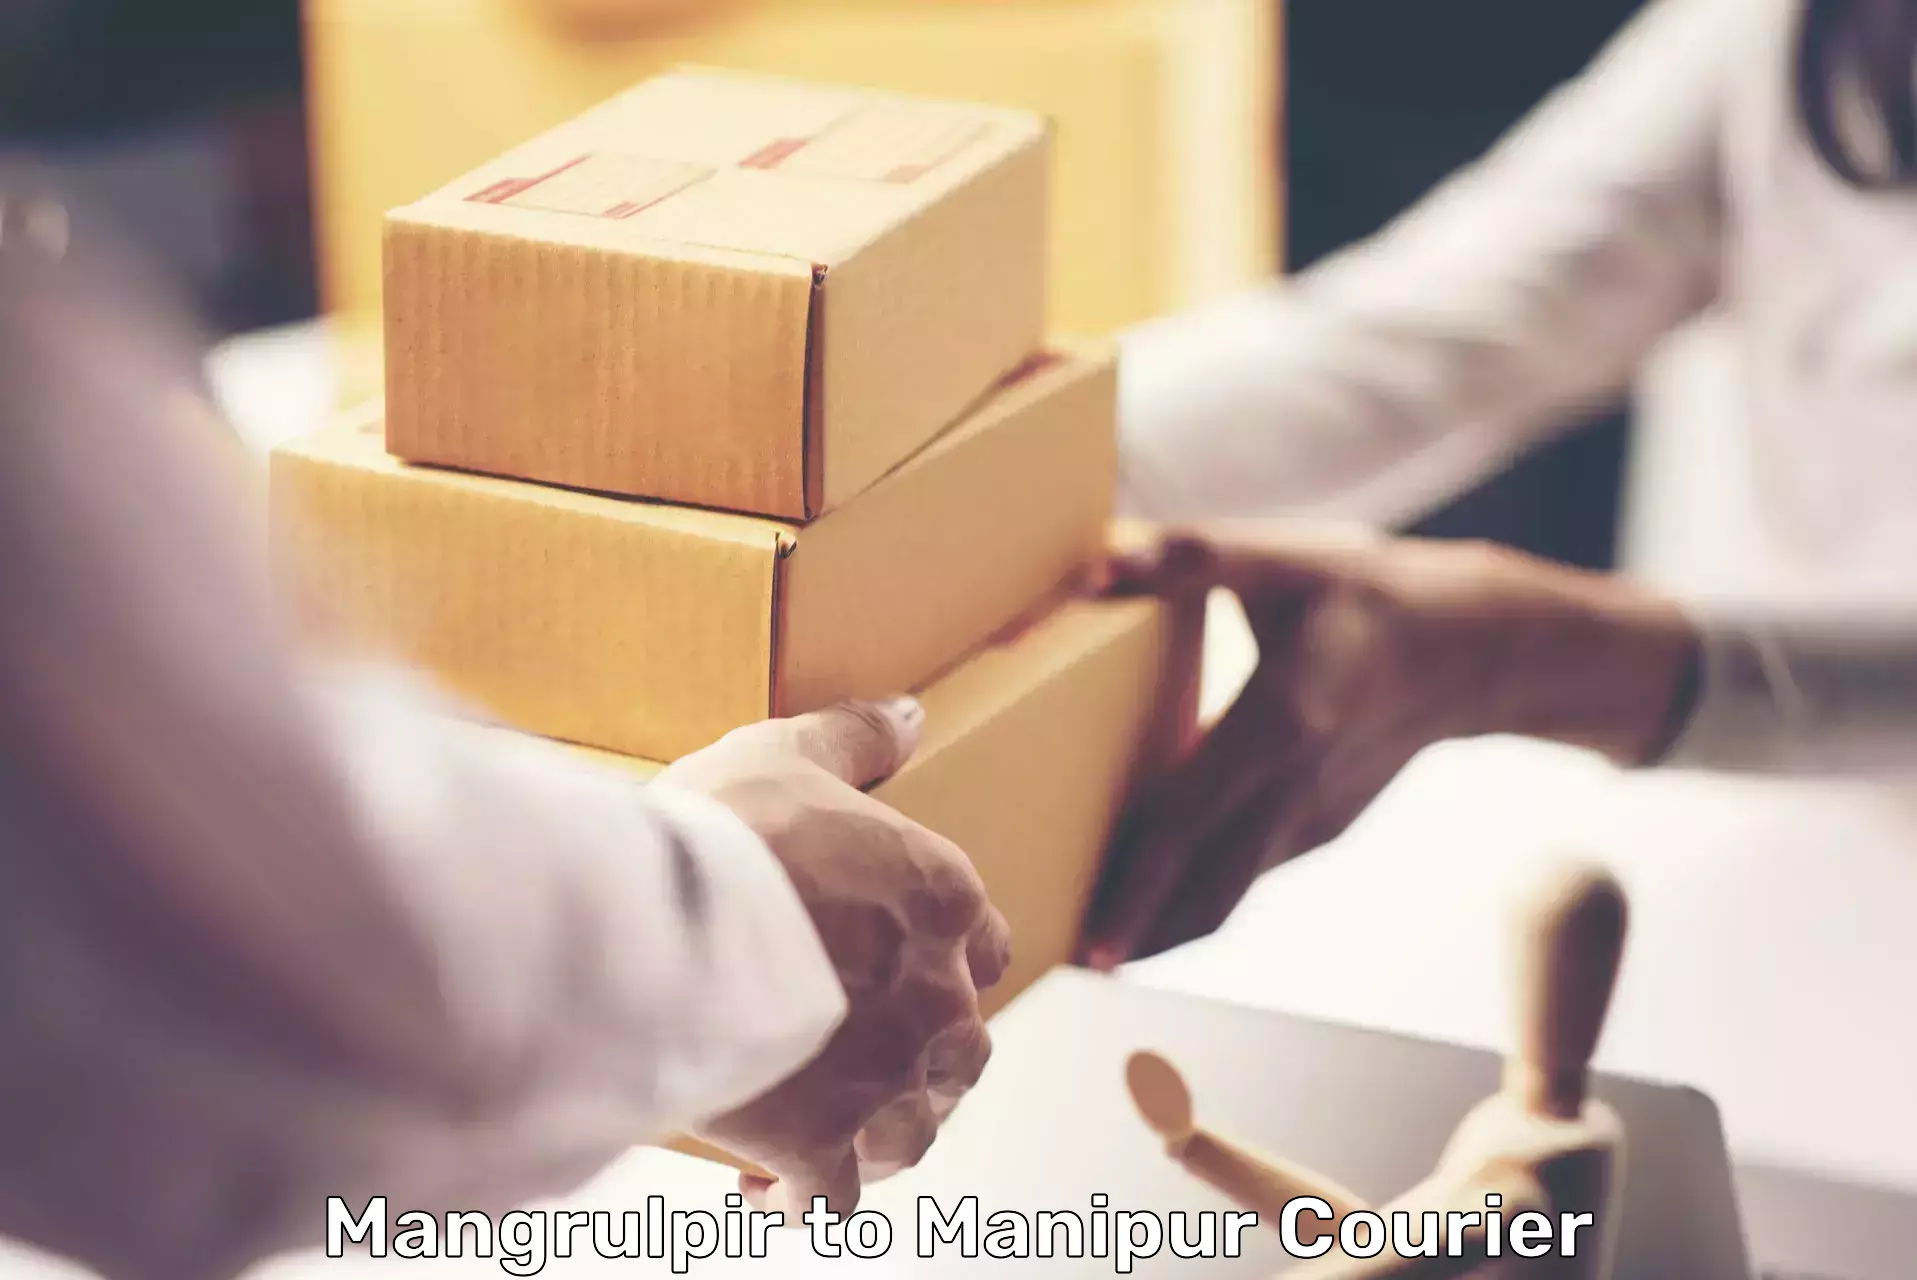 Courier service comparison Mangrulpir to Moirang